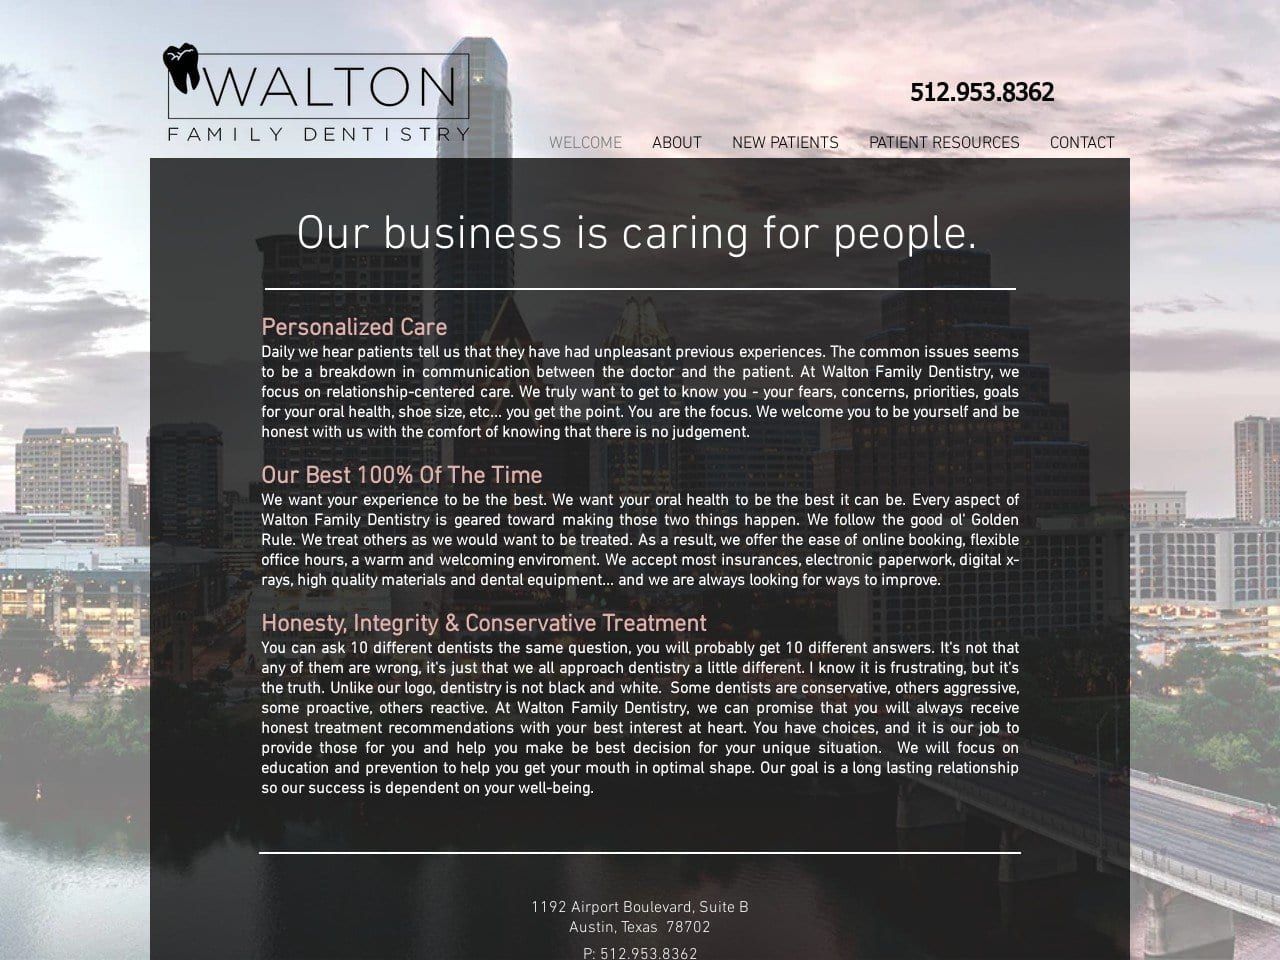 Walton Family Dentistry Website Screenshot from waltonfamilydentistry.com